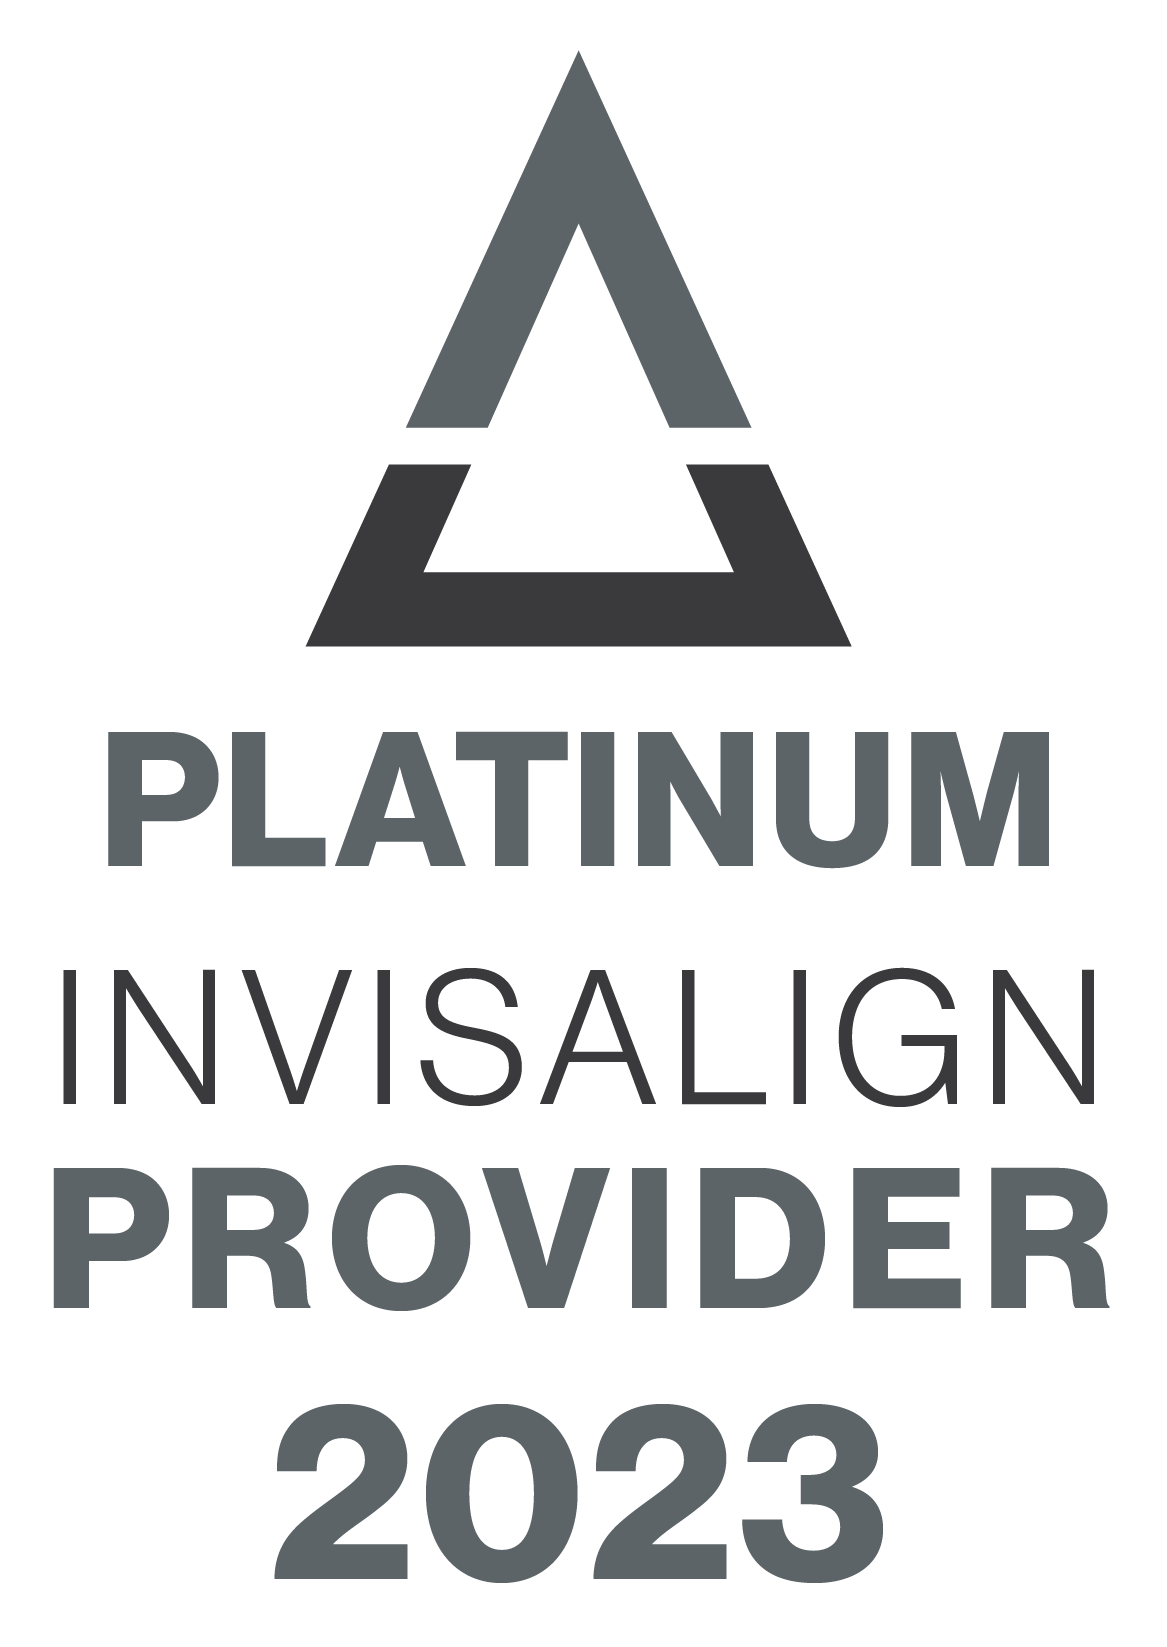 Platinum Invisalign provider 2023 icon